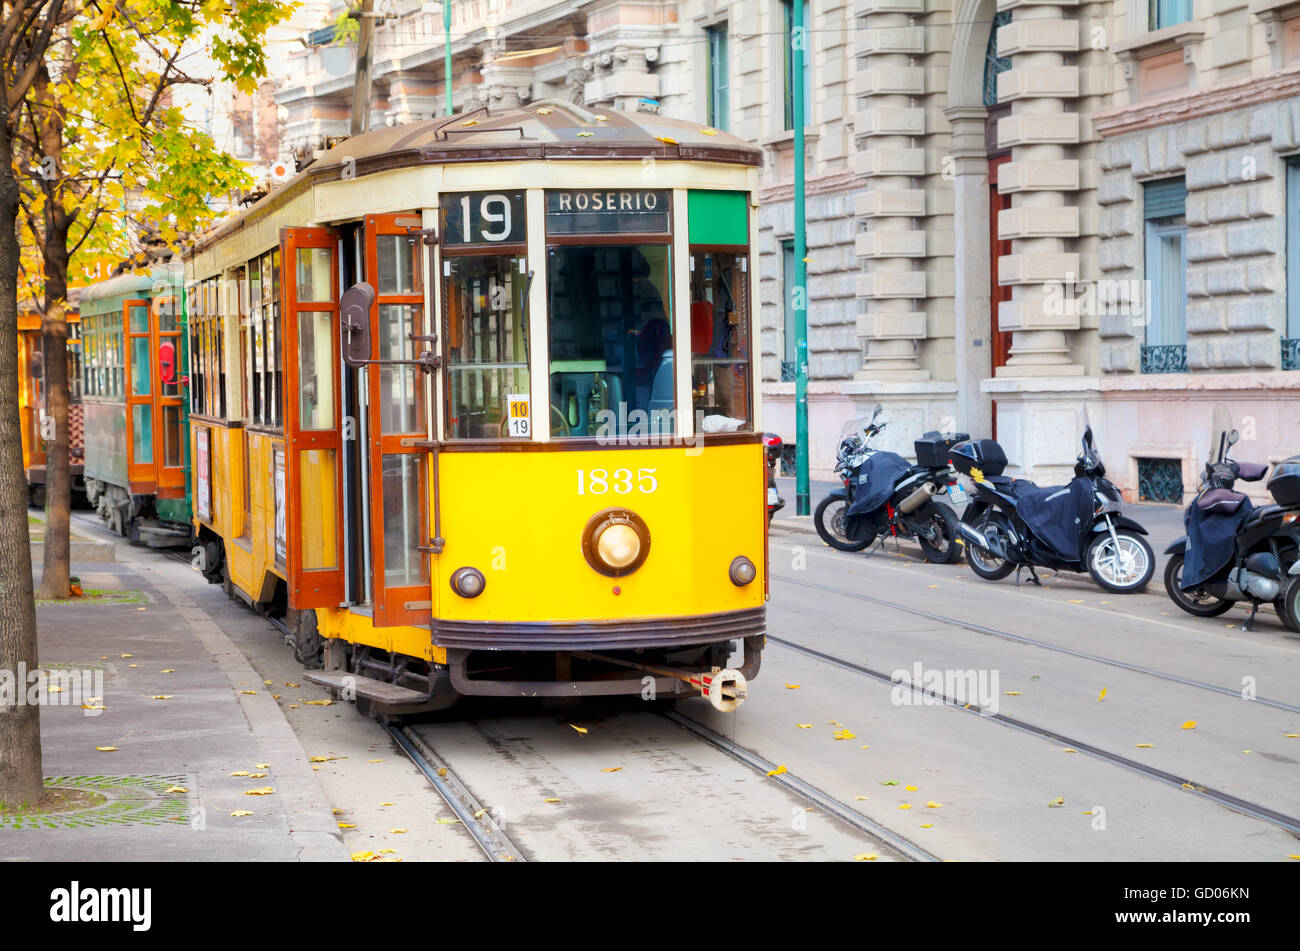 MILAN, ITALIE - 25 novembre : ancien tramway à la Piazza Castello, le 25 novembre 2015 à Milan, Italie. Banque D'Images